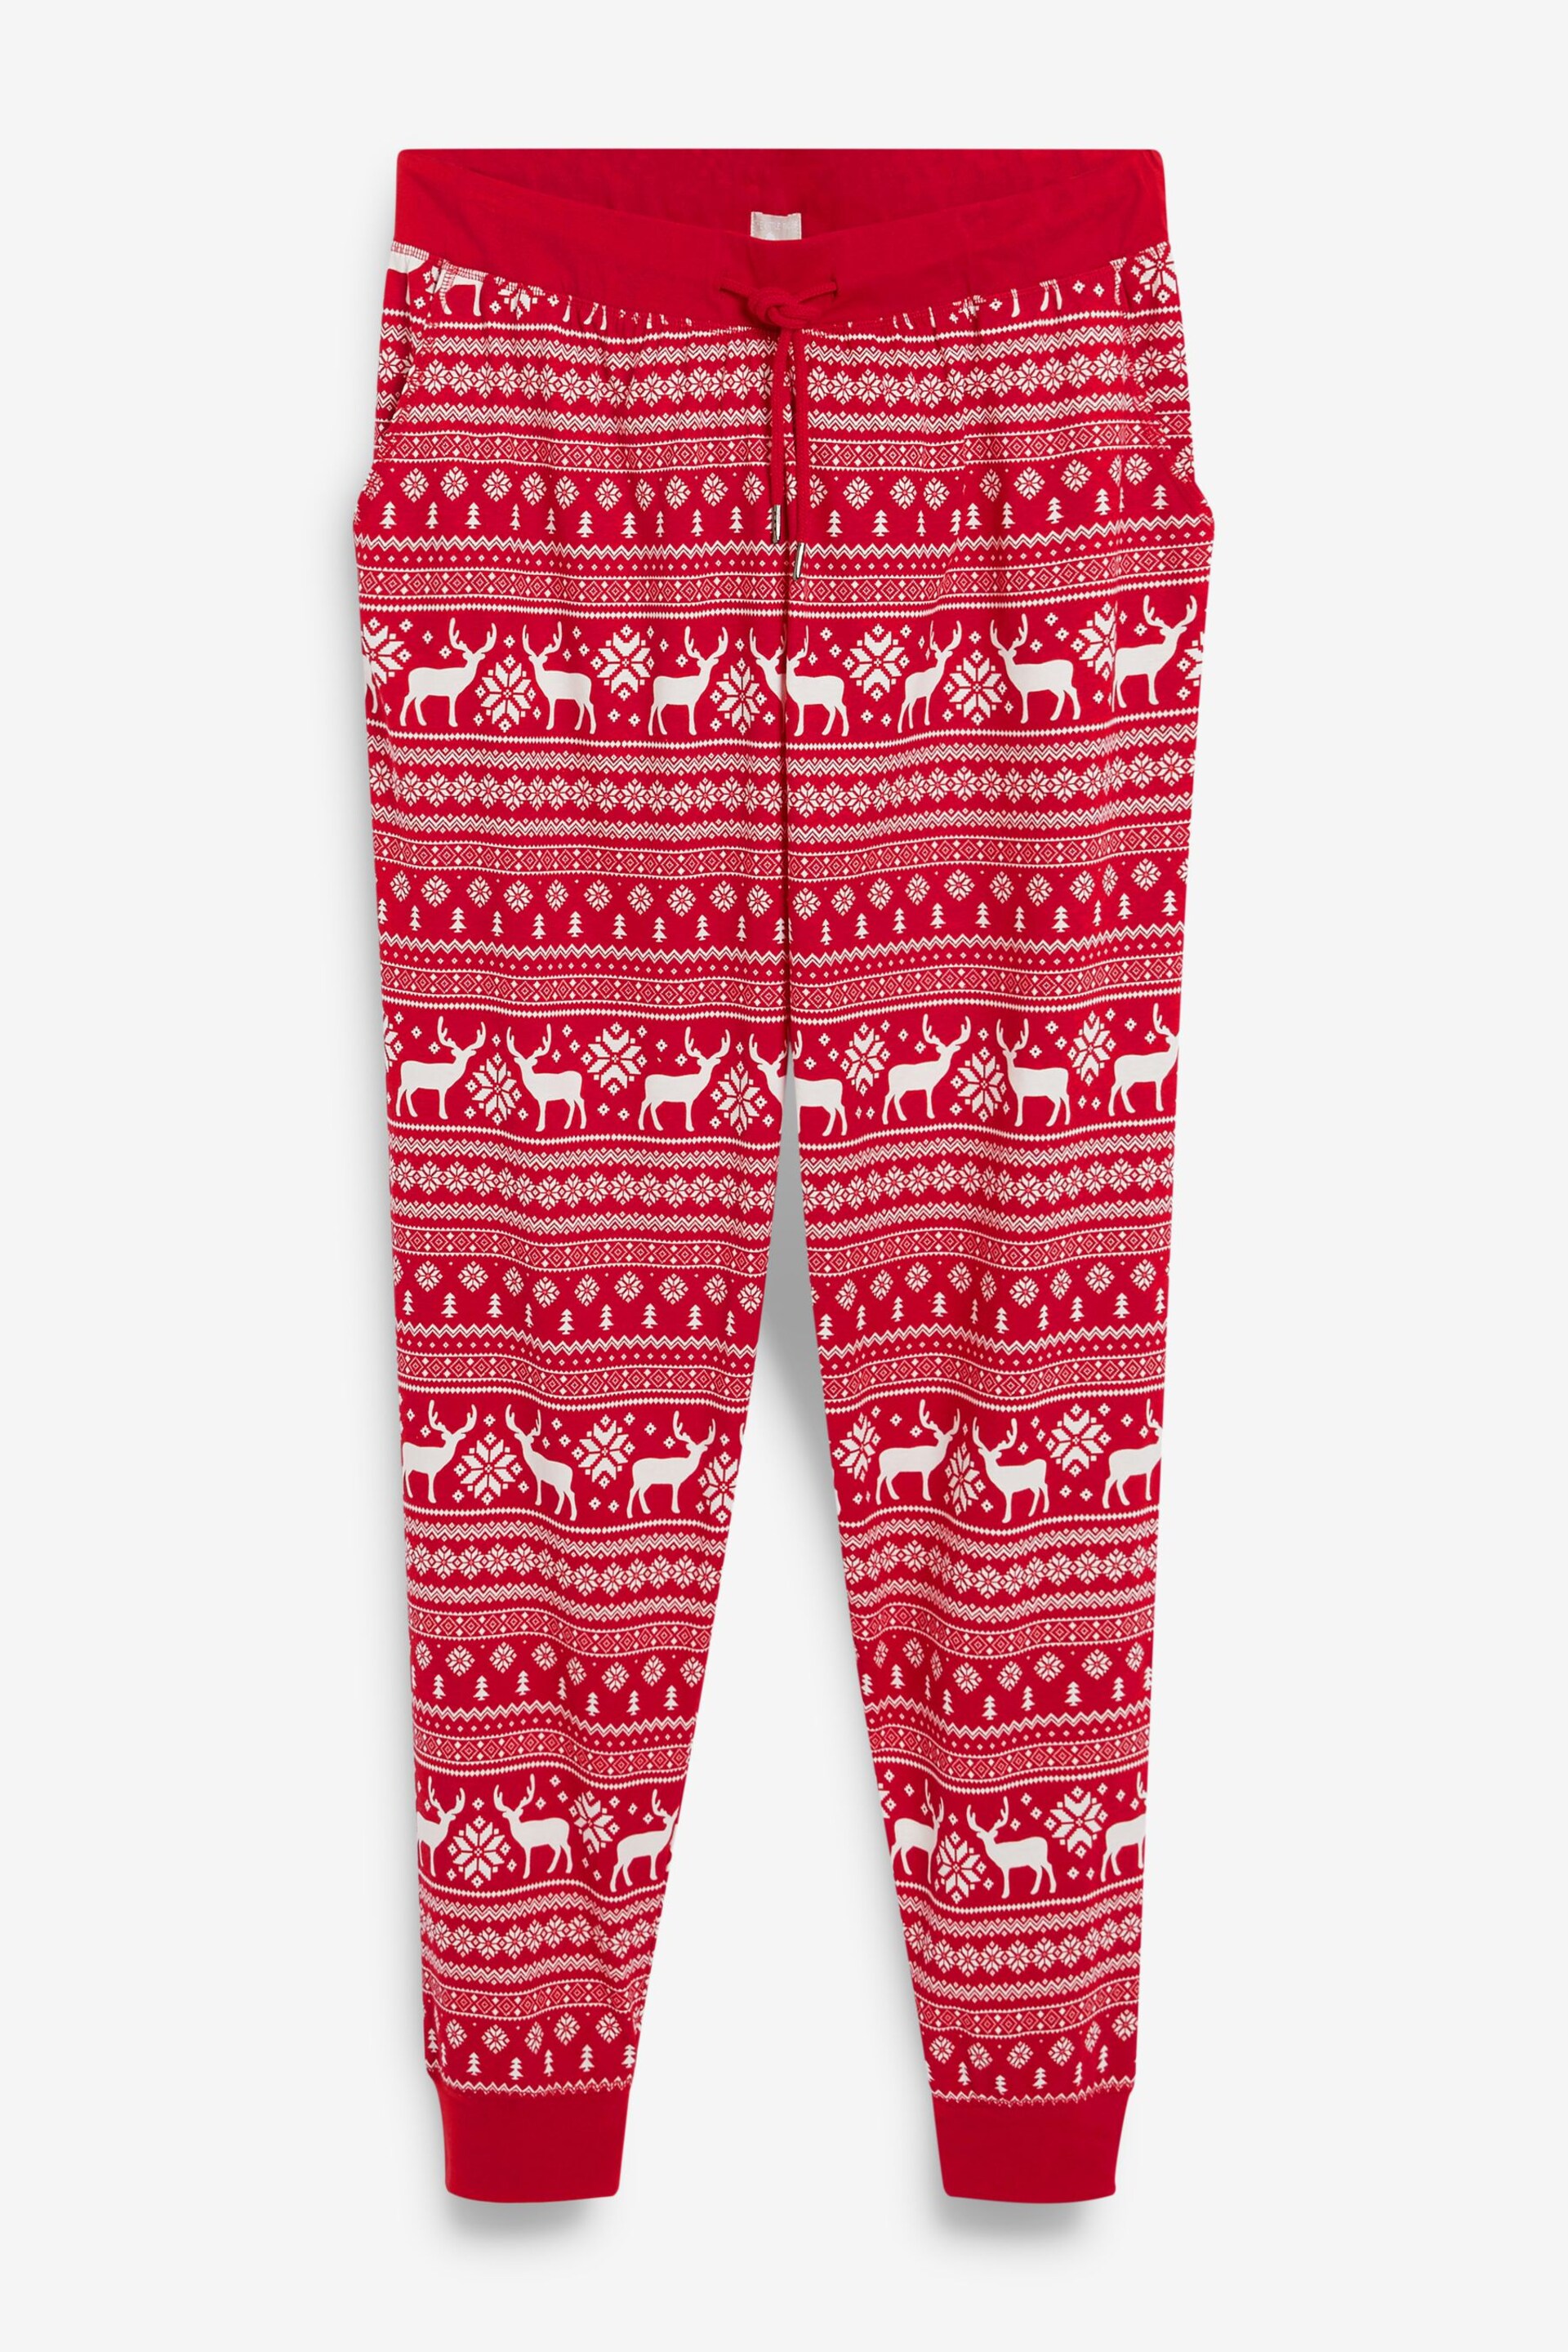 The Little Tailor Men's Red Reindeer Christmas Fairisle Pyjamas - Image 8 of 11